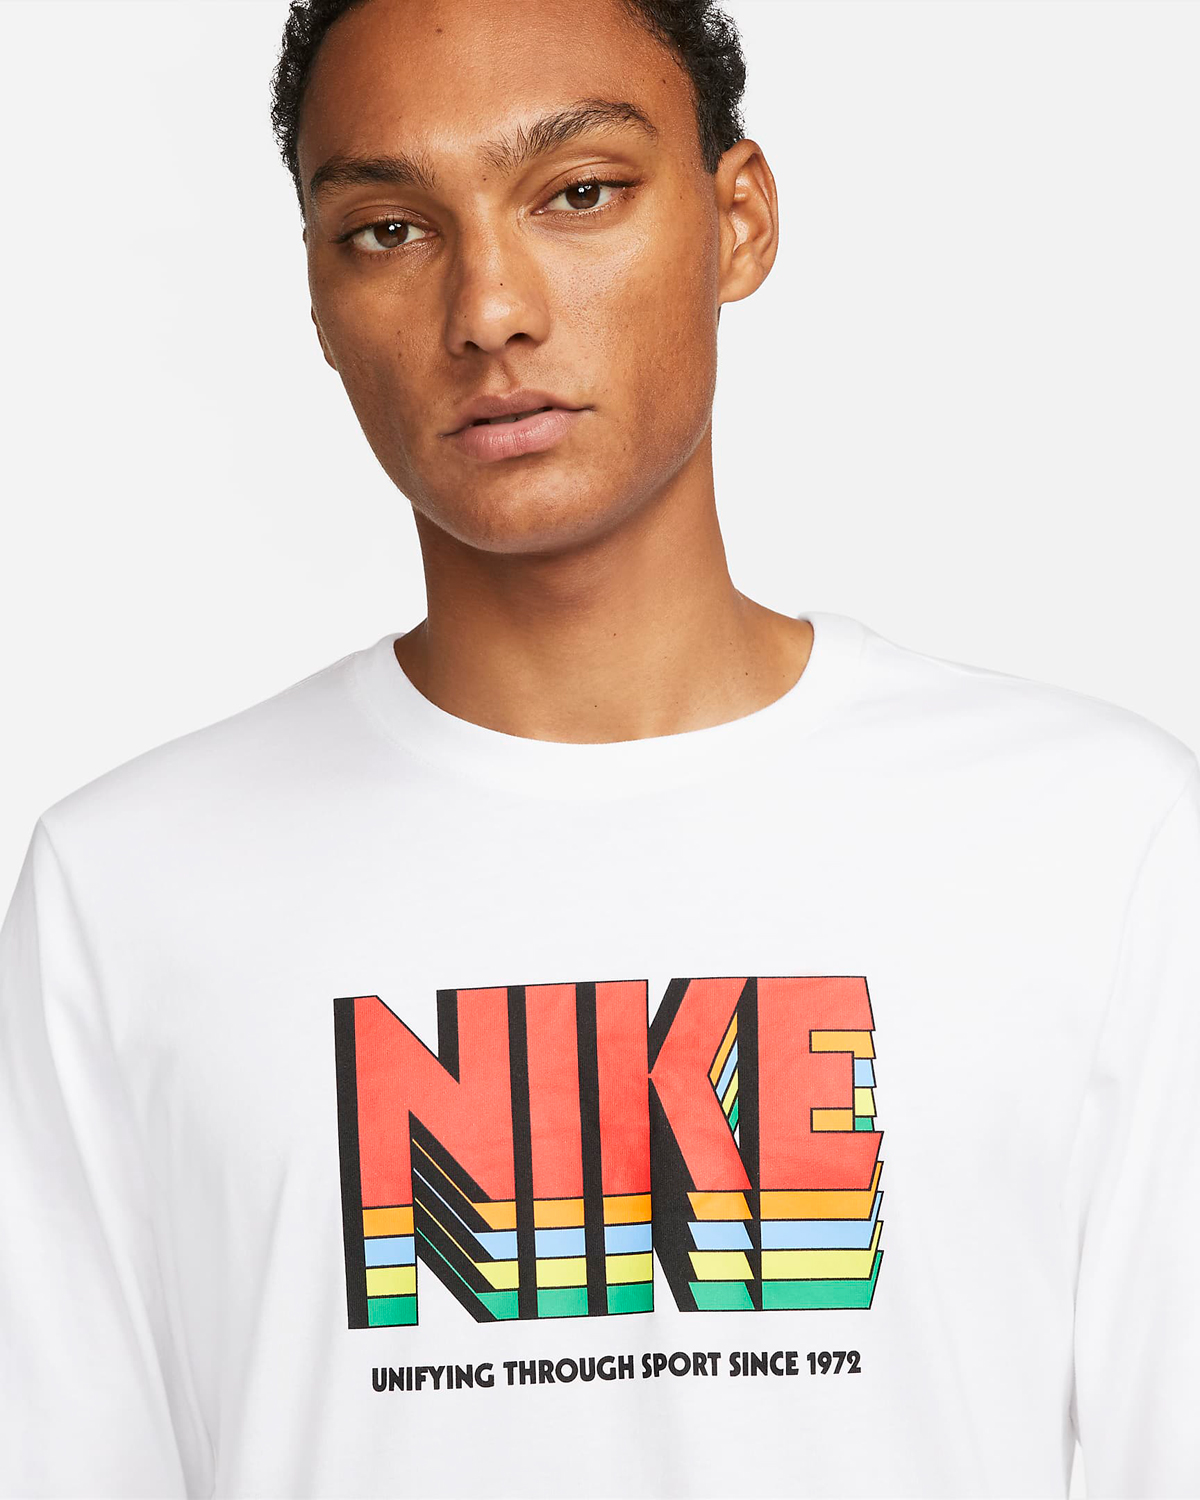 Nike-Sportswear-Long-Sleeve-T-Shirt-White-Multi-Color-2